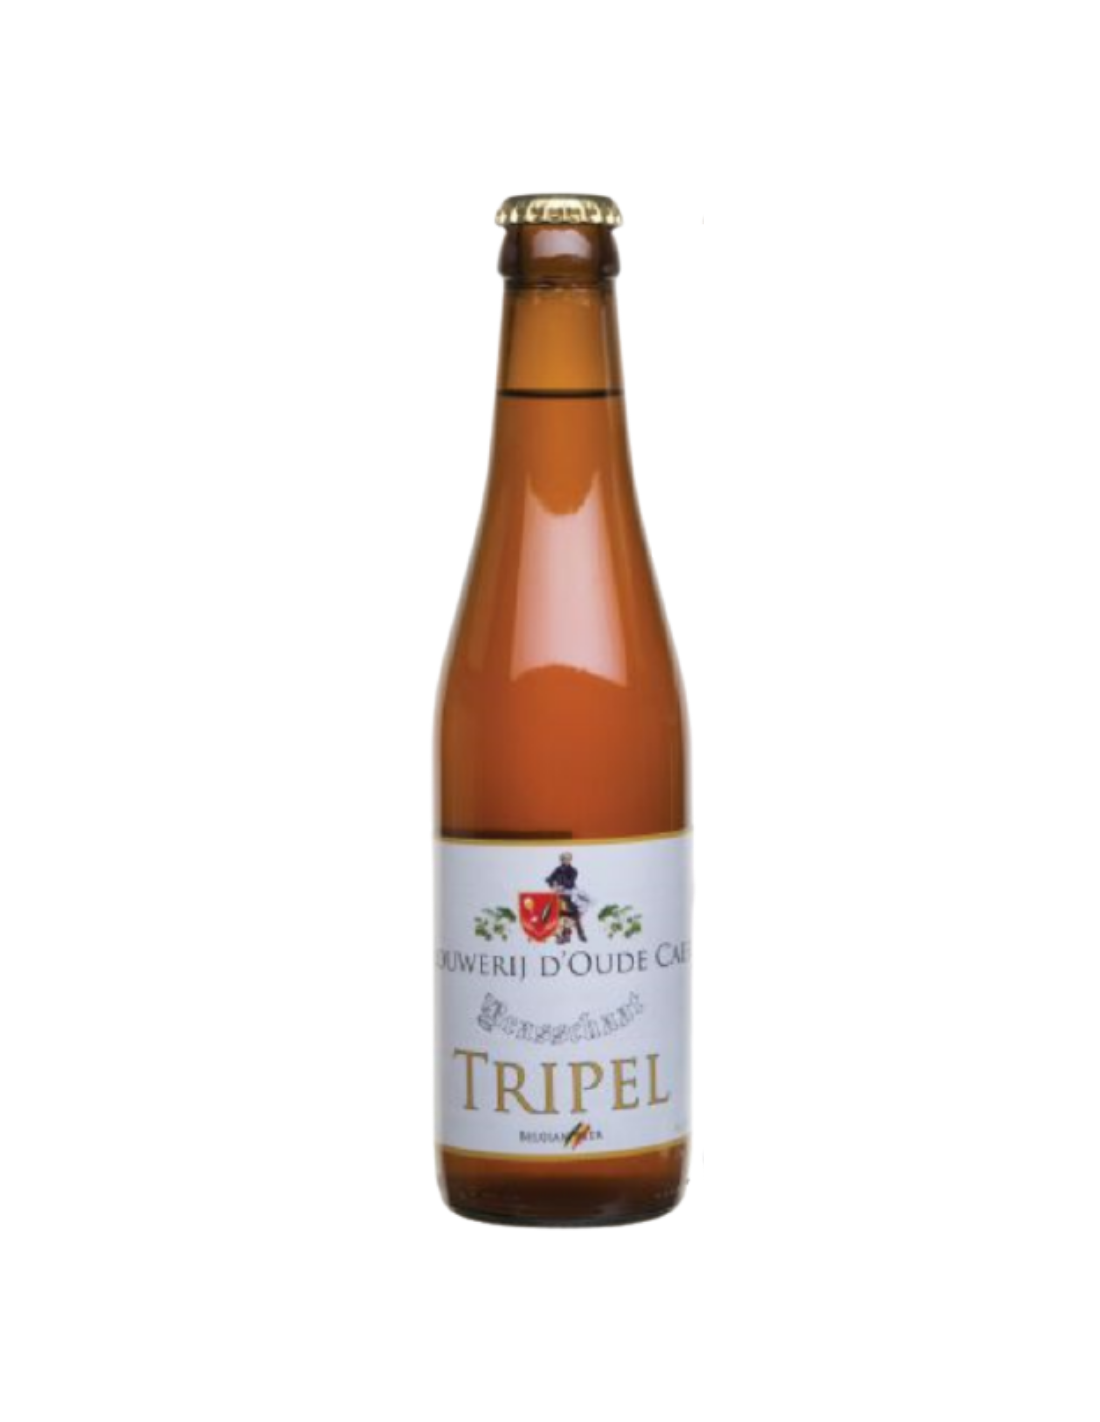 Bere blonda, artizanala D’Oude Caert Tripel, 8% alc., 0.33L, sticla, Belgia alcooldiscount.ro